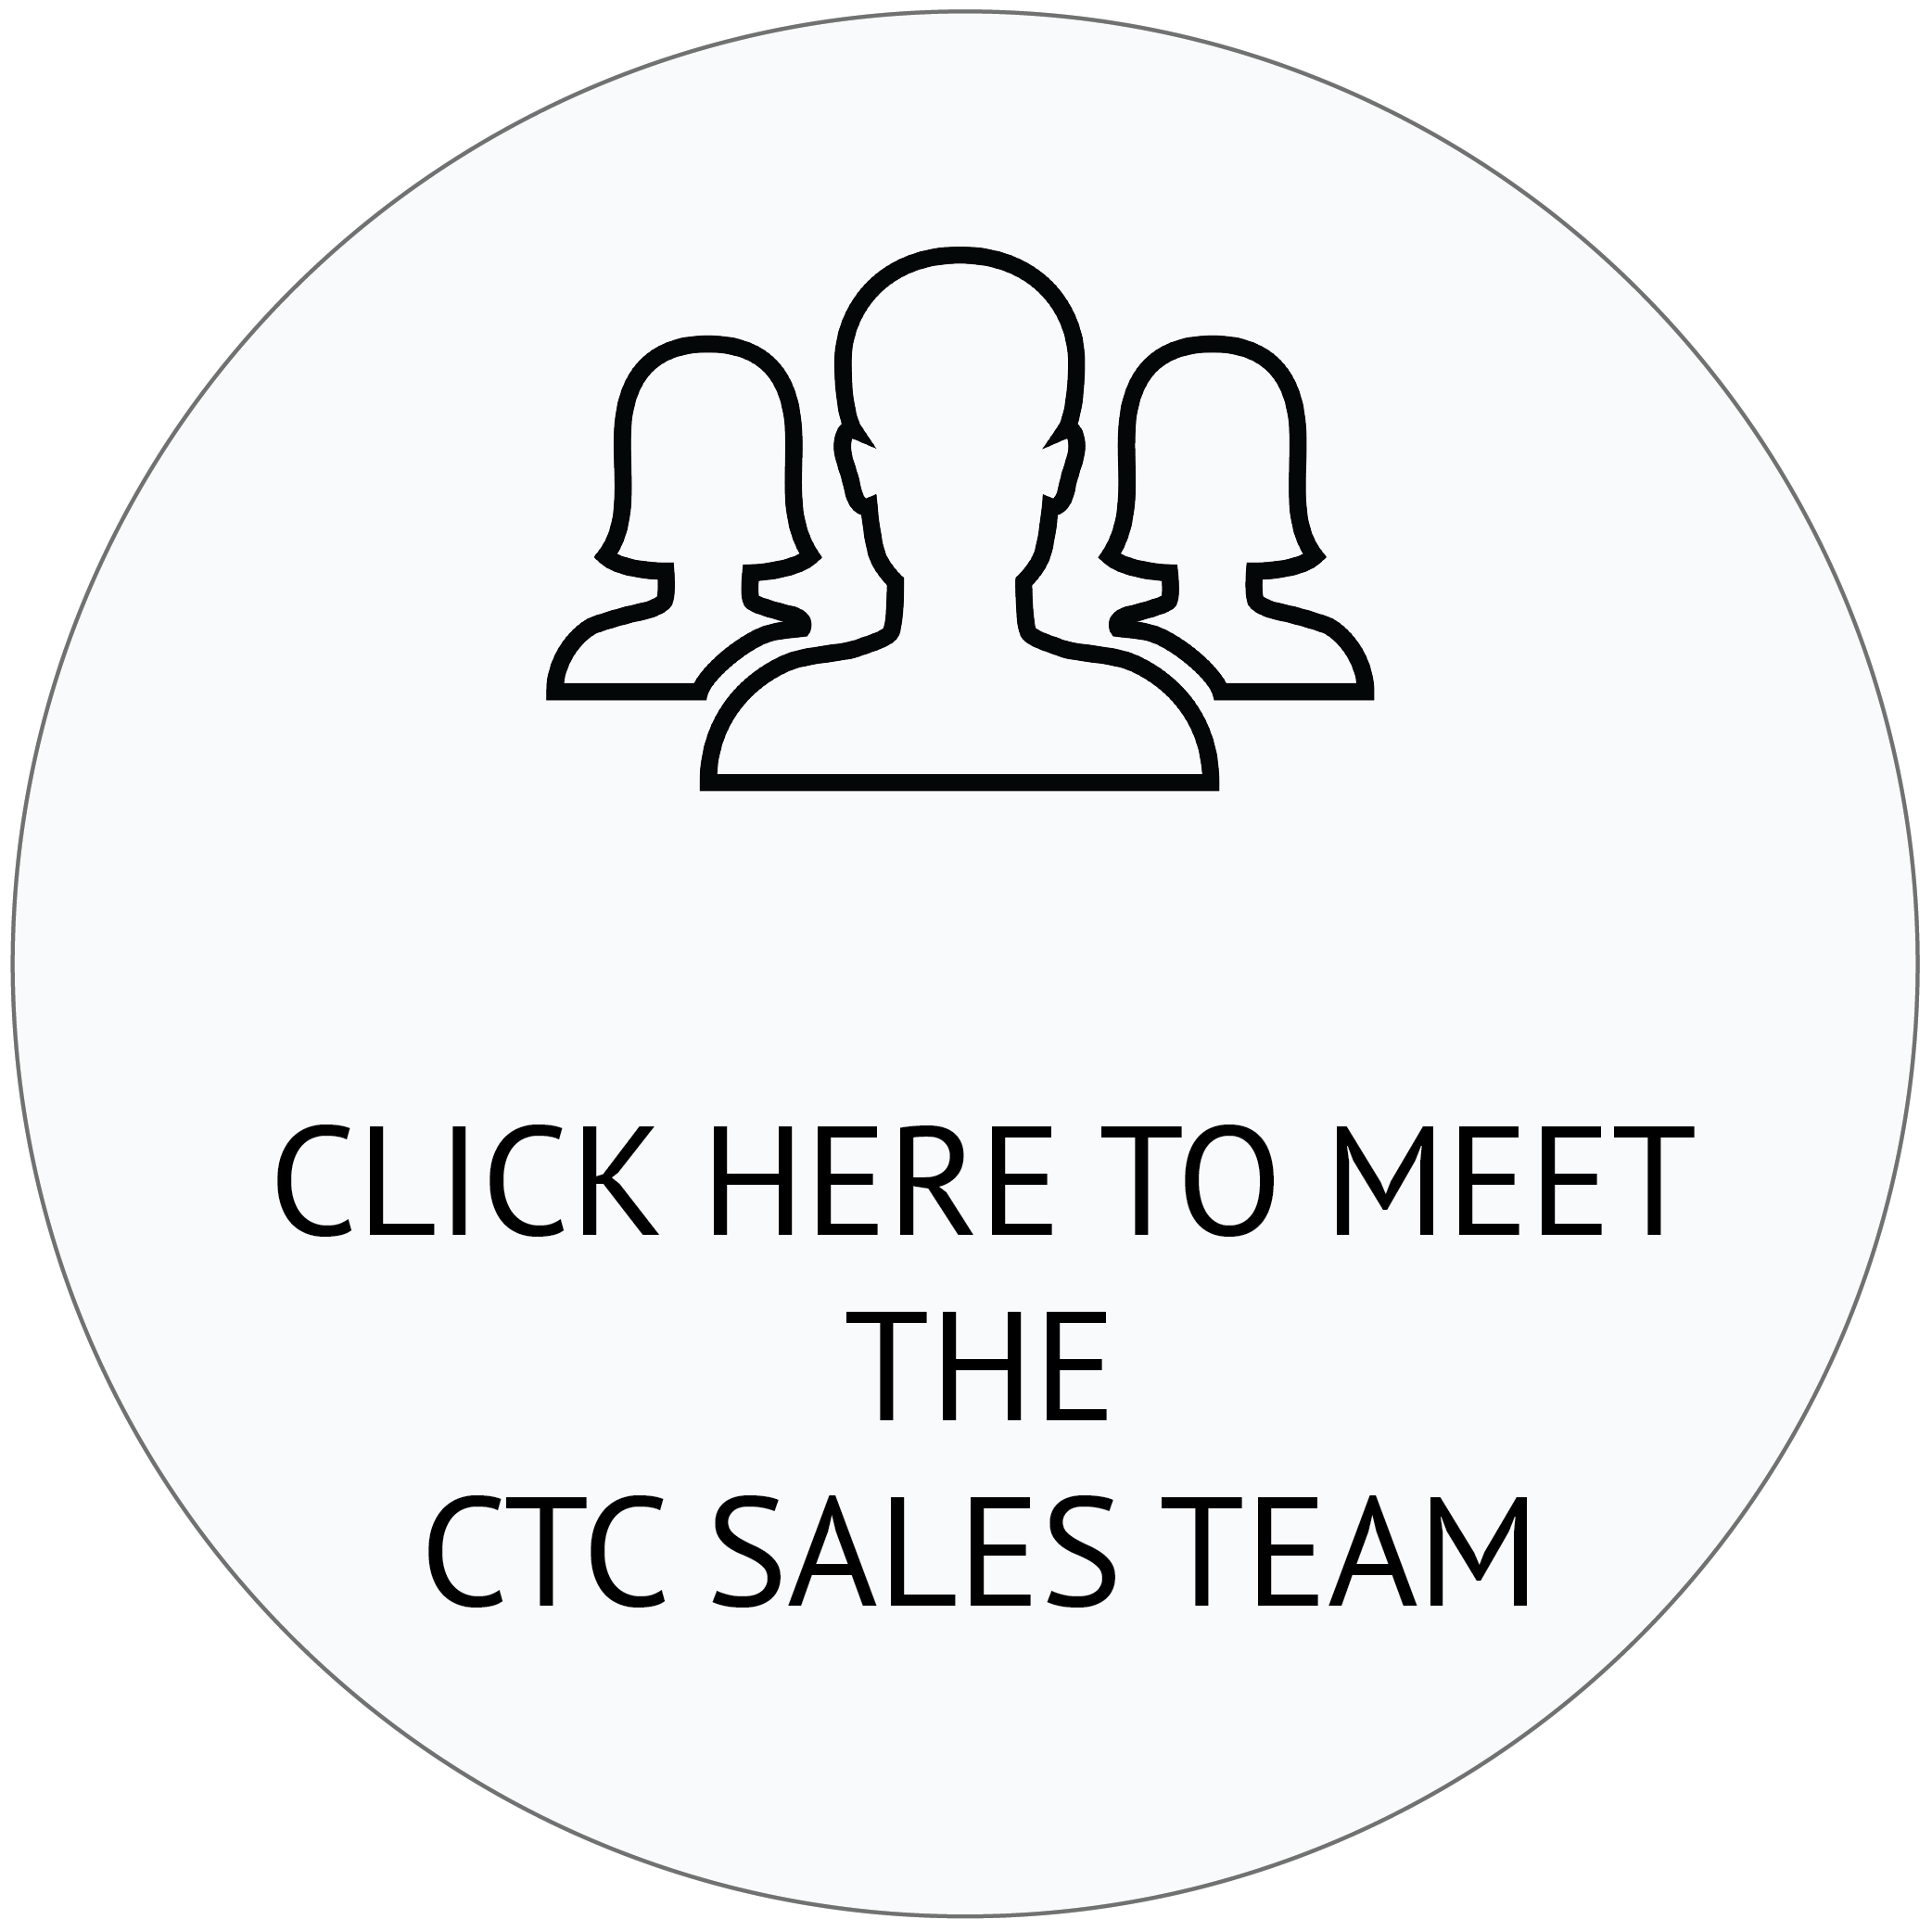 Meet the sales team